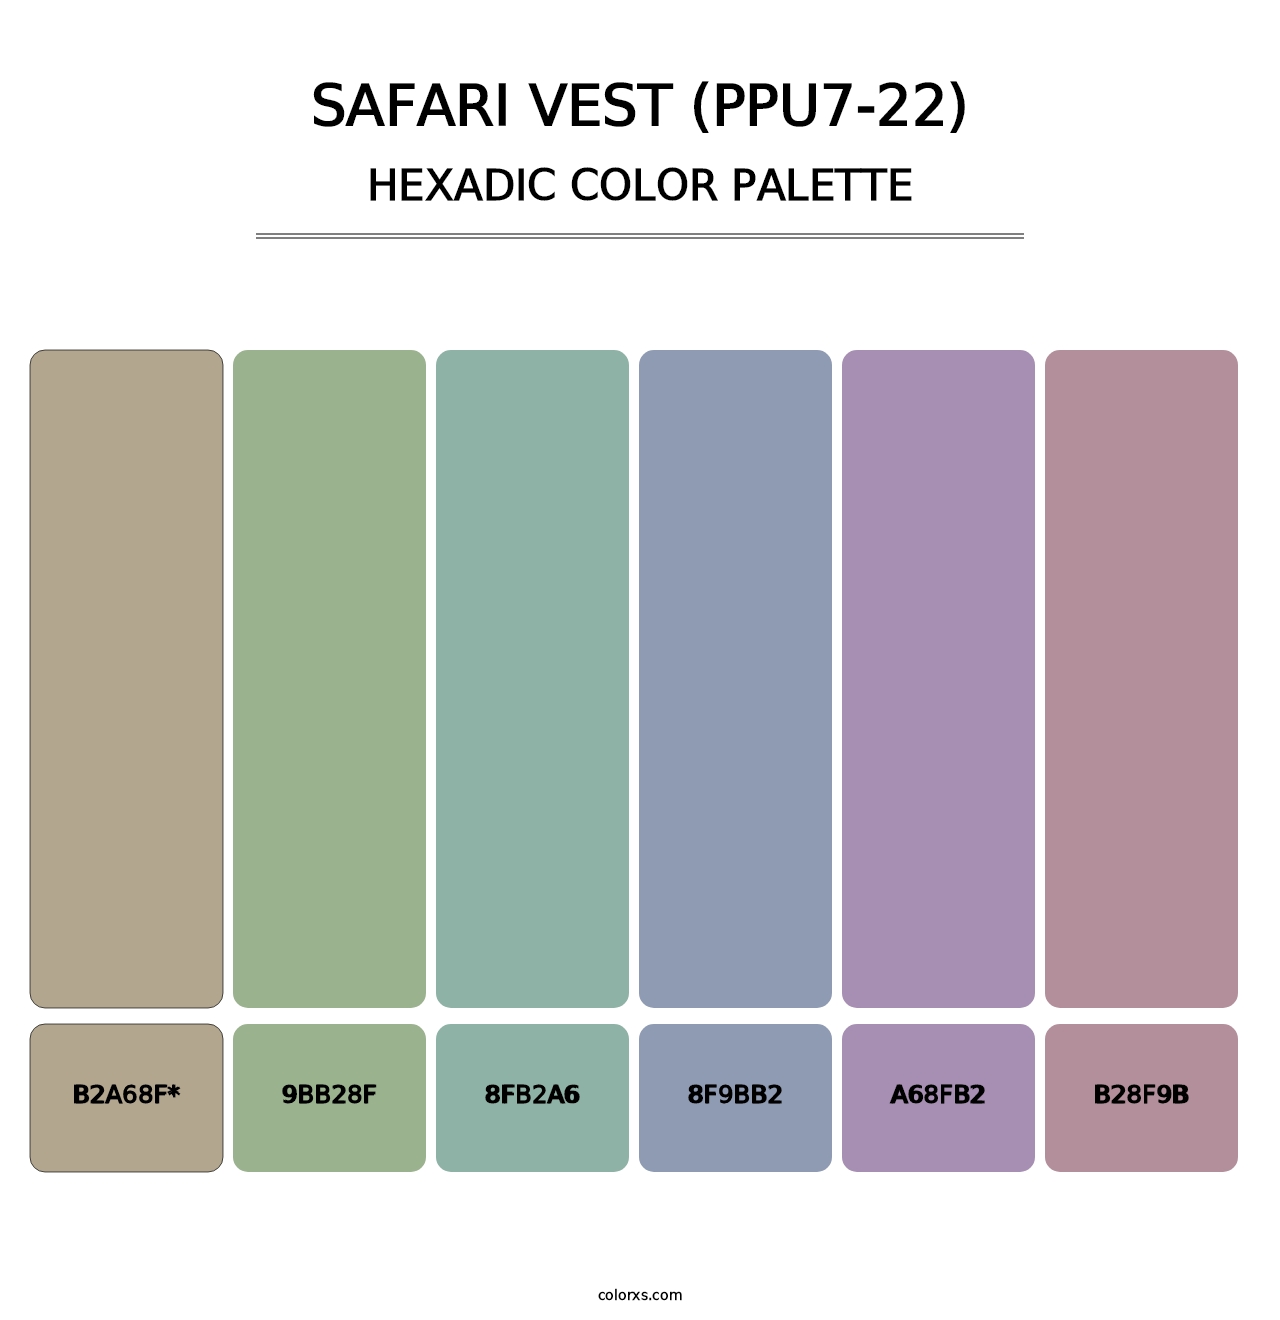 Safari Vest (PPU7-22) - Hexadic Color Palette